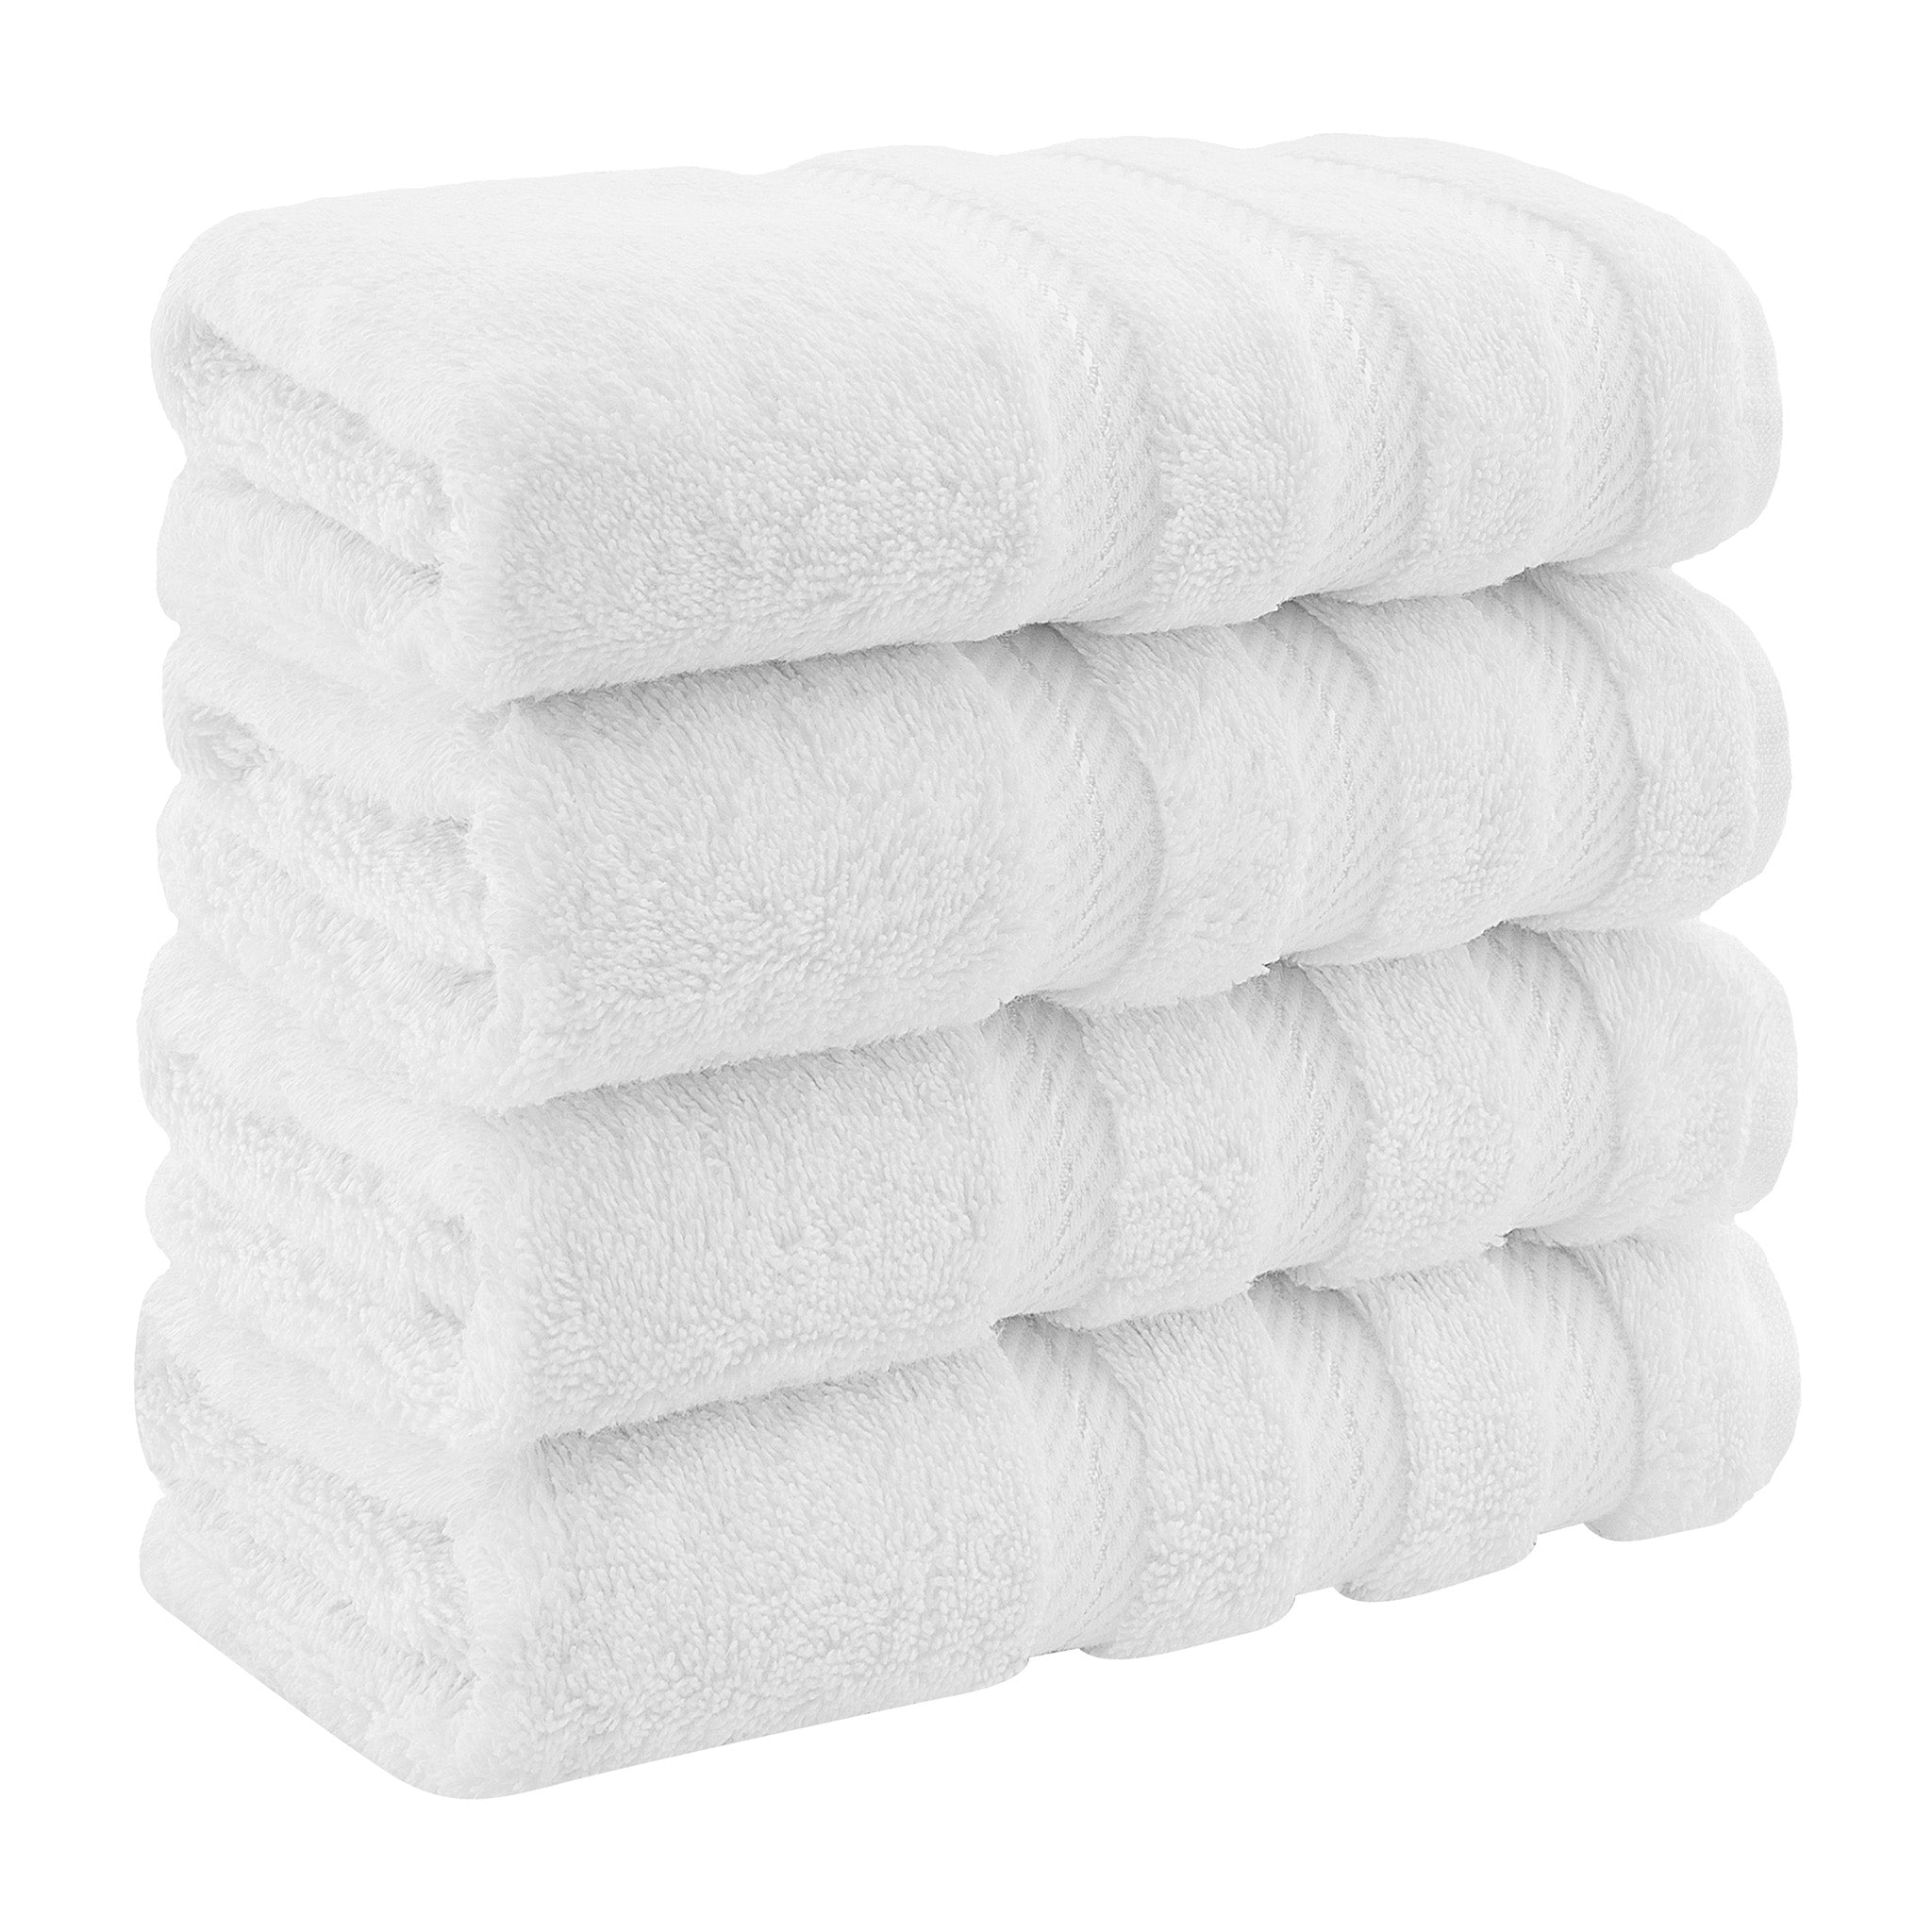 4 Pack Hand Towel Set, 100% Turkish Cotton Best Hand Towels